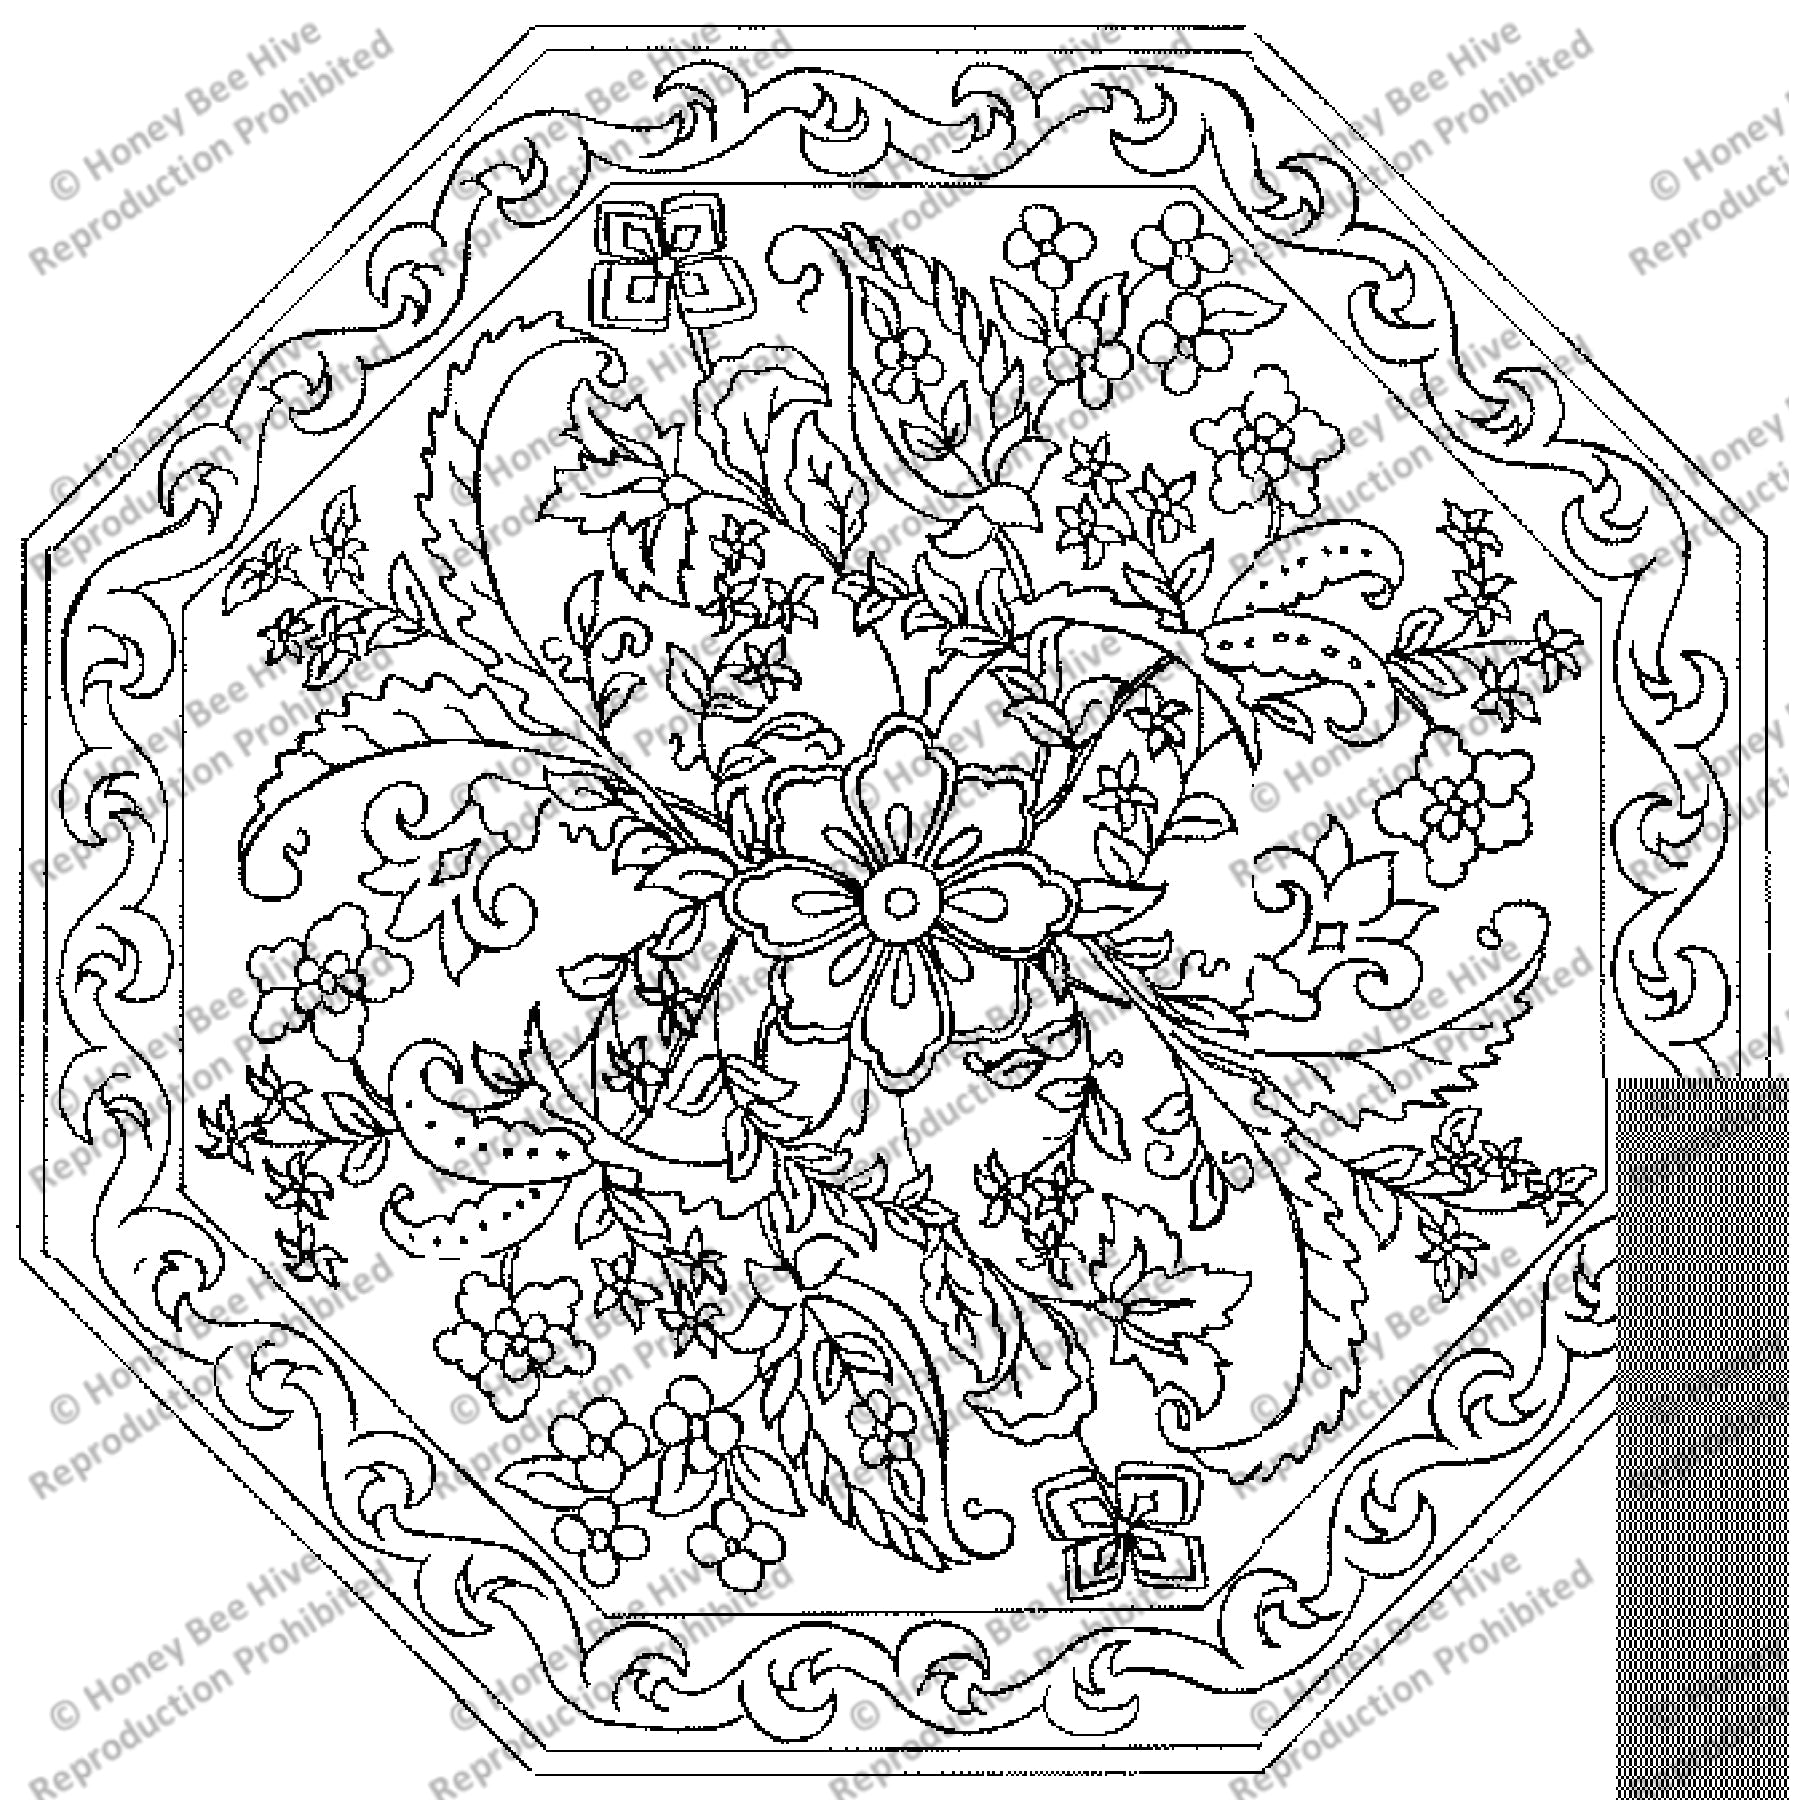 Arabesque Center, rug hooking pattern